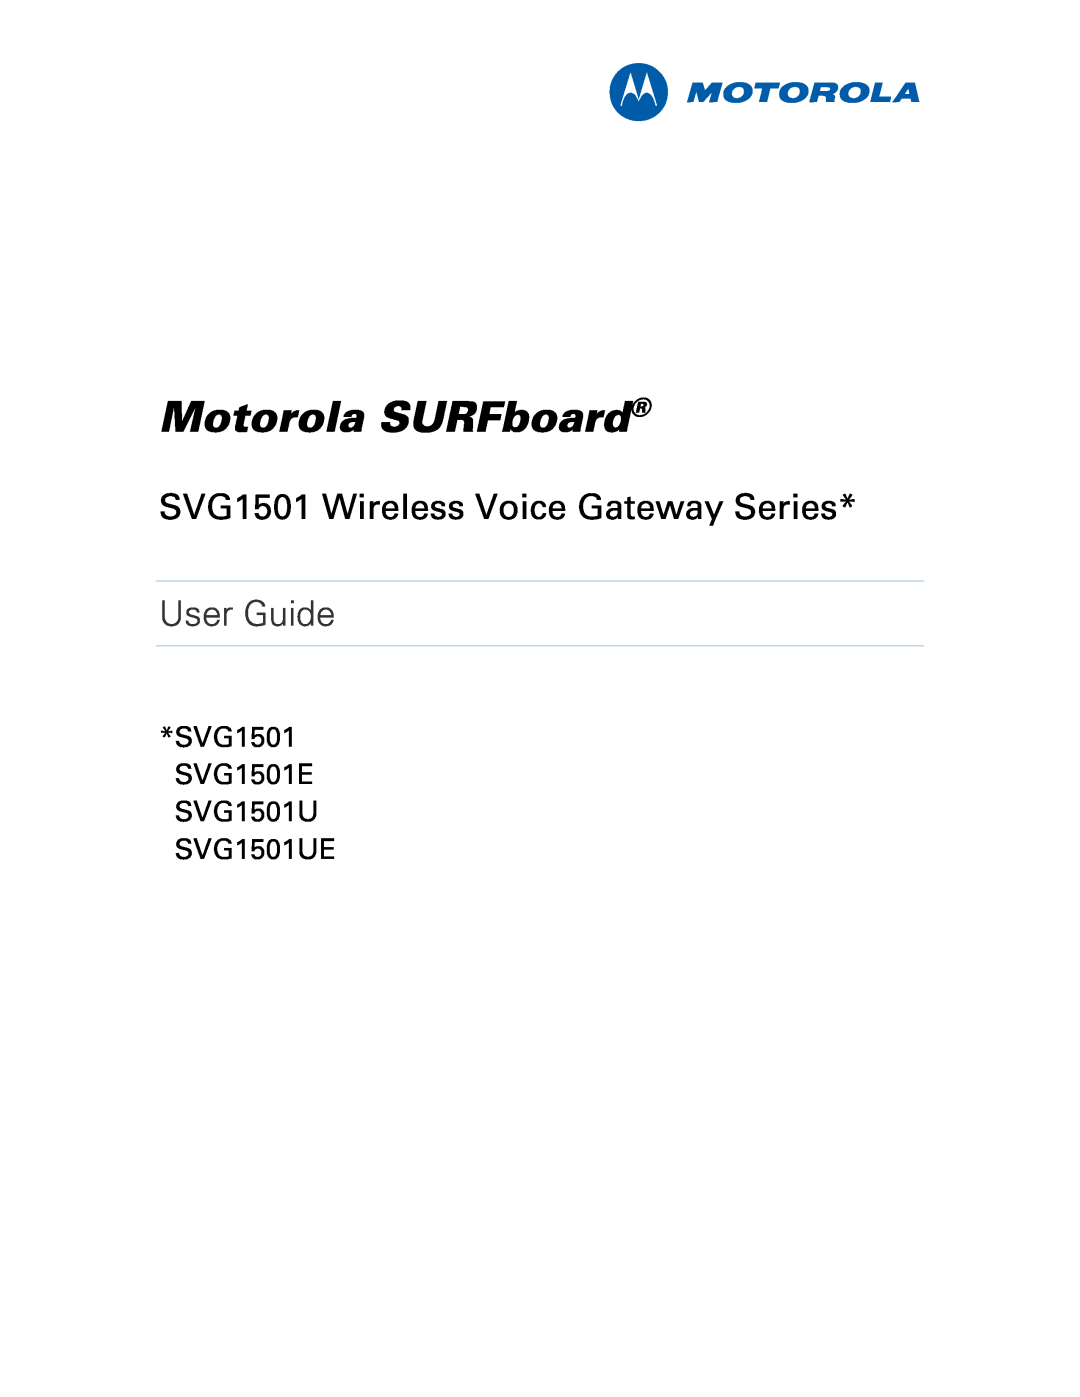 Motorola SVG1501E, SVG1501UE manual Motorola SURFboard, SVG1501 Wireless Voice Gateway Series, User Guide 